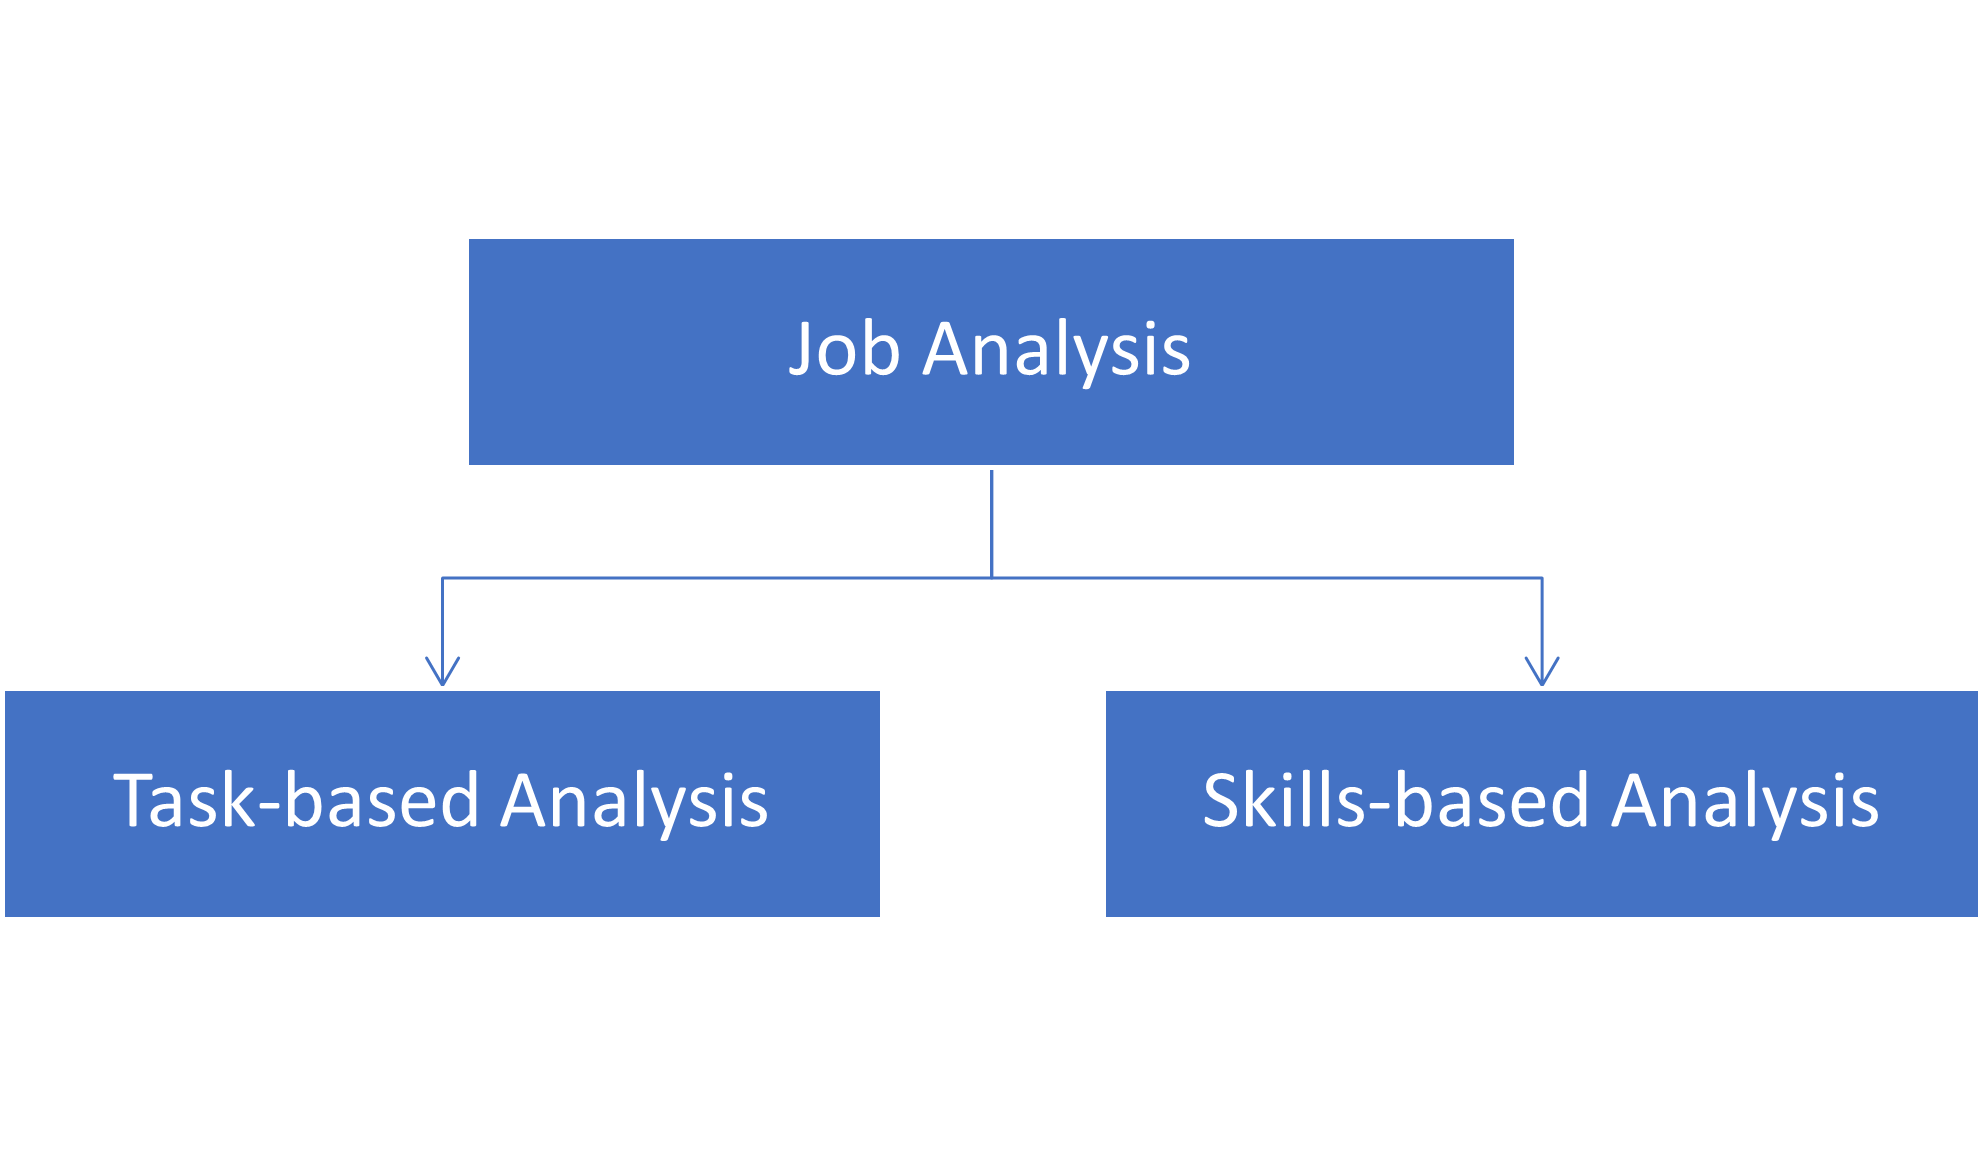 Job analysis is comprised of task and skills based analysis